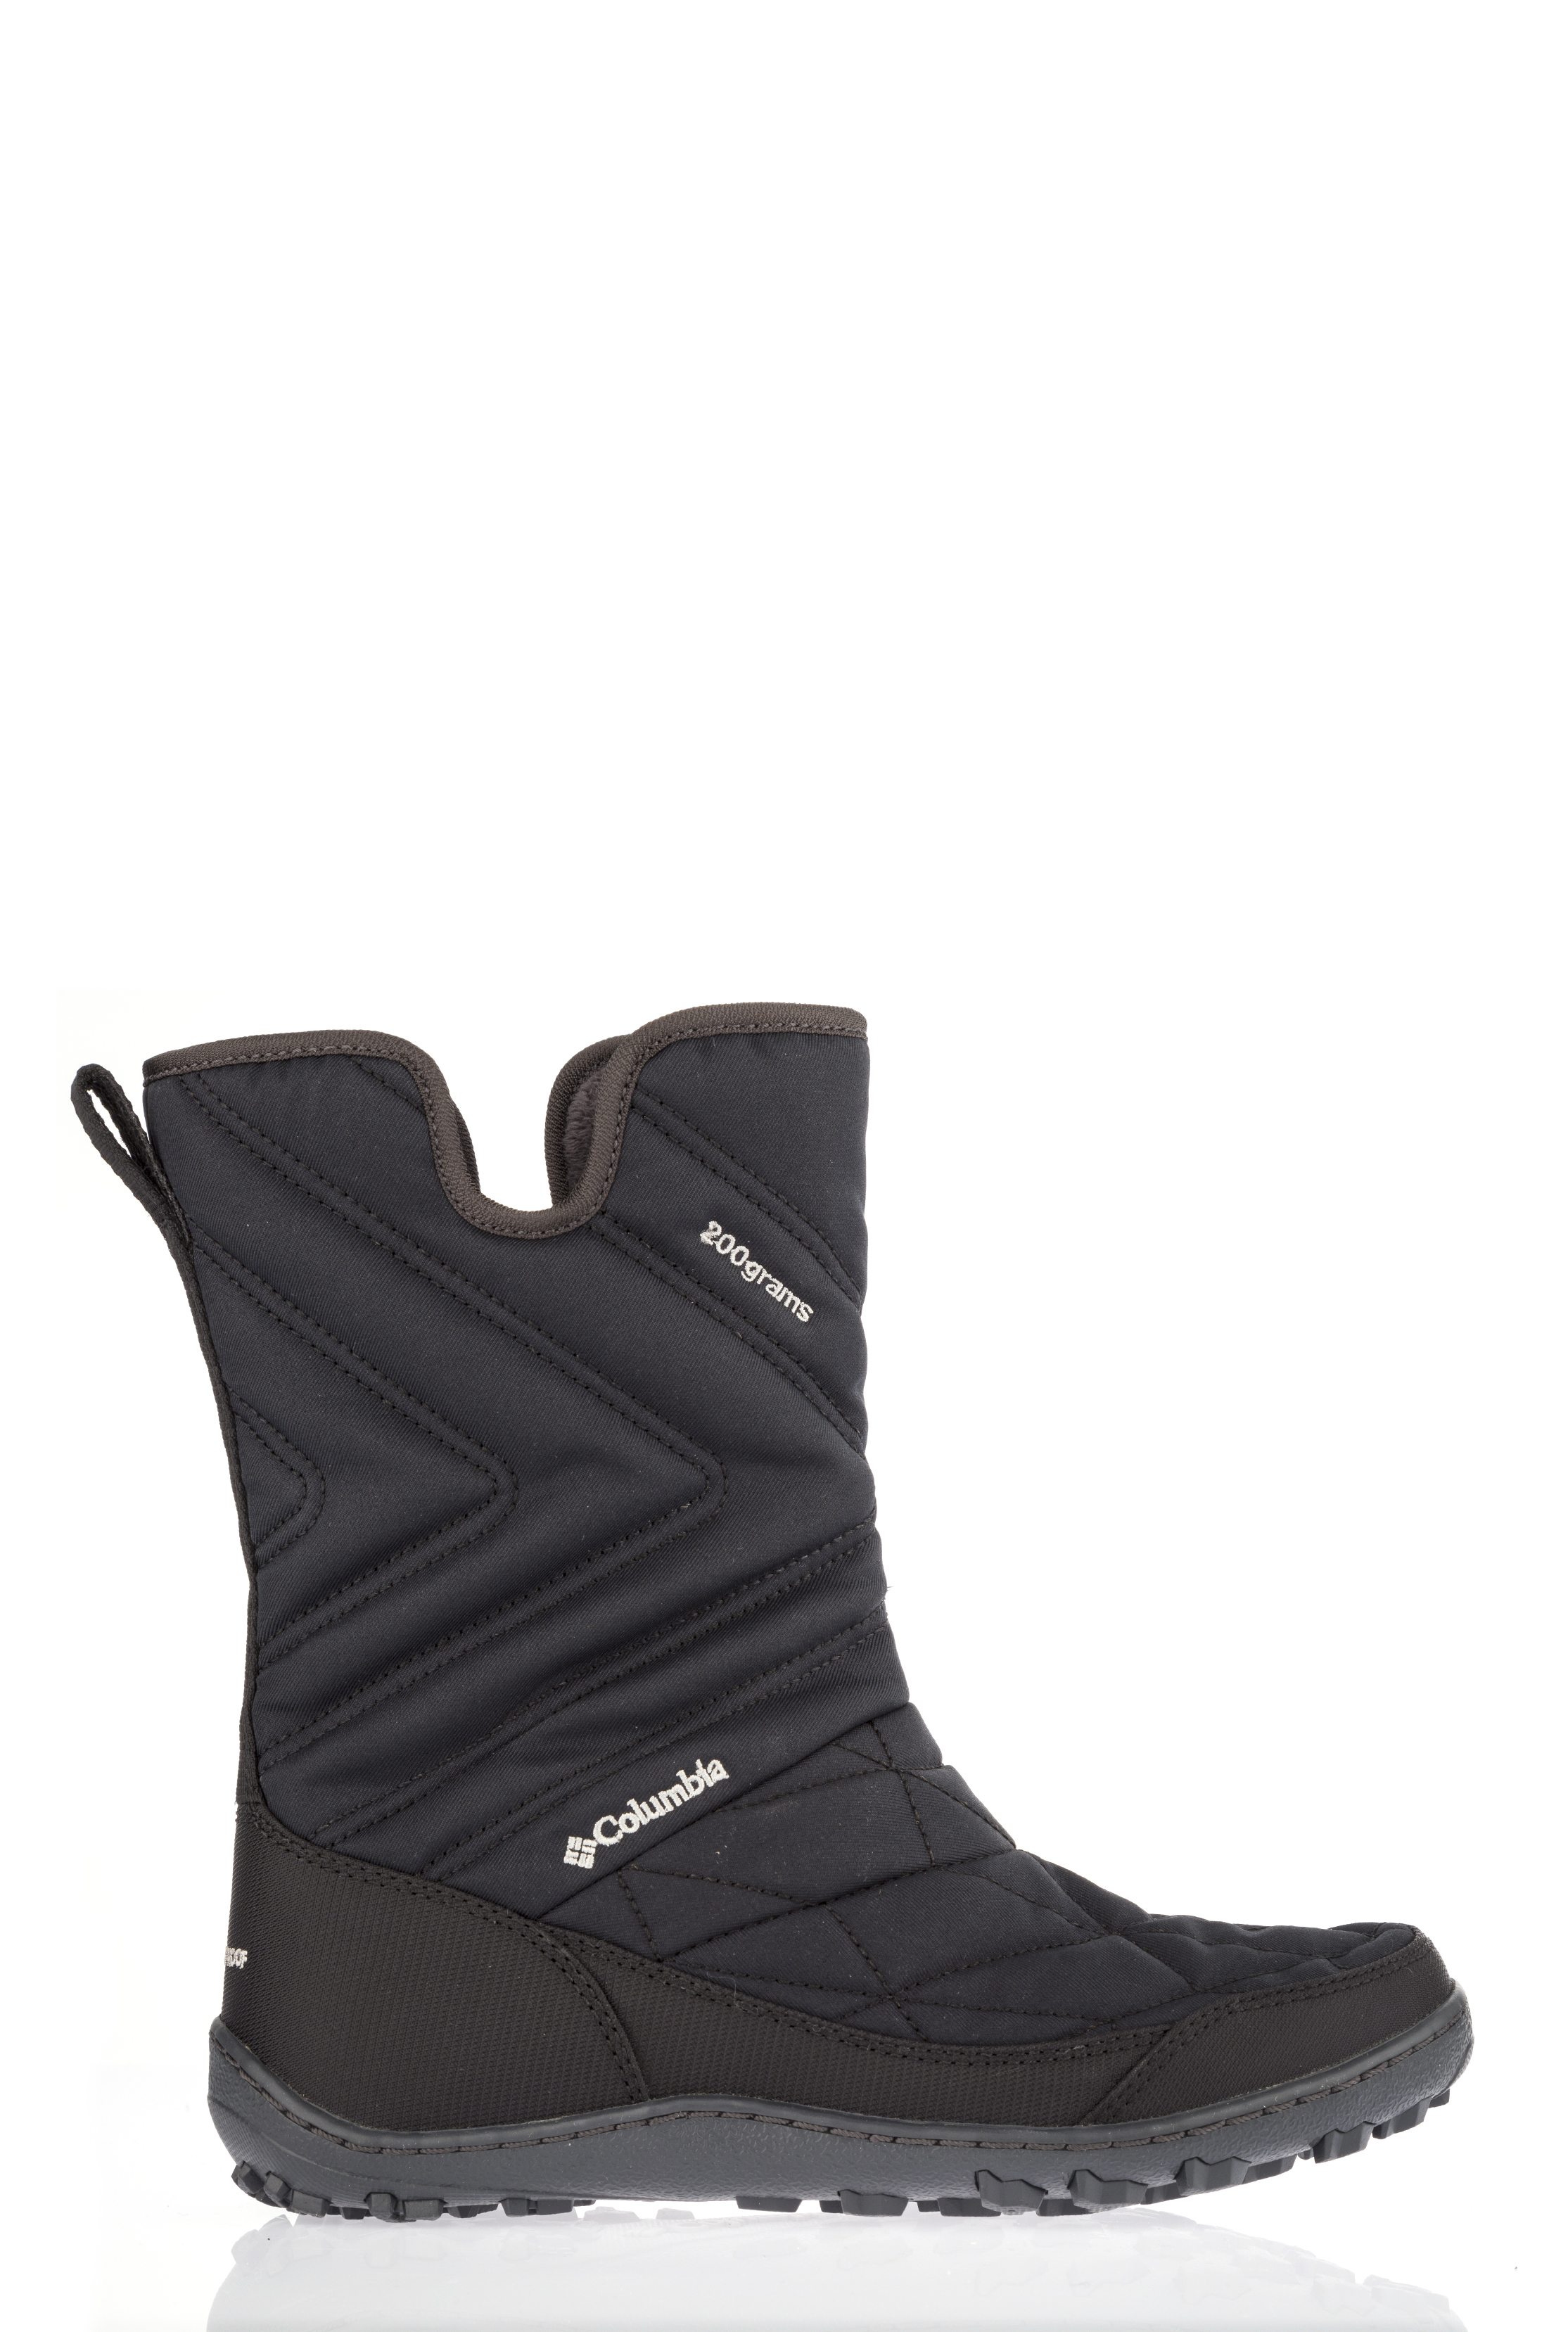 columbia black snow boots